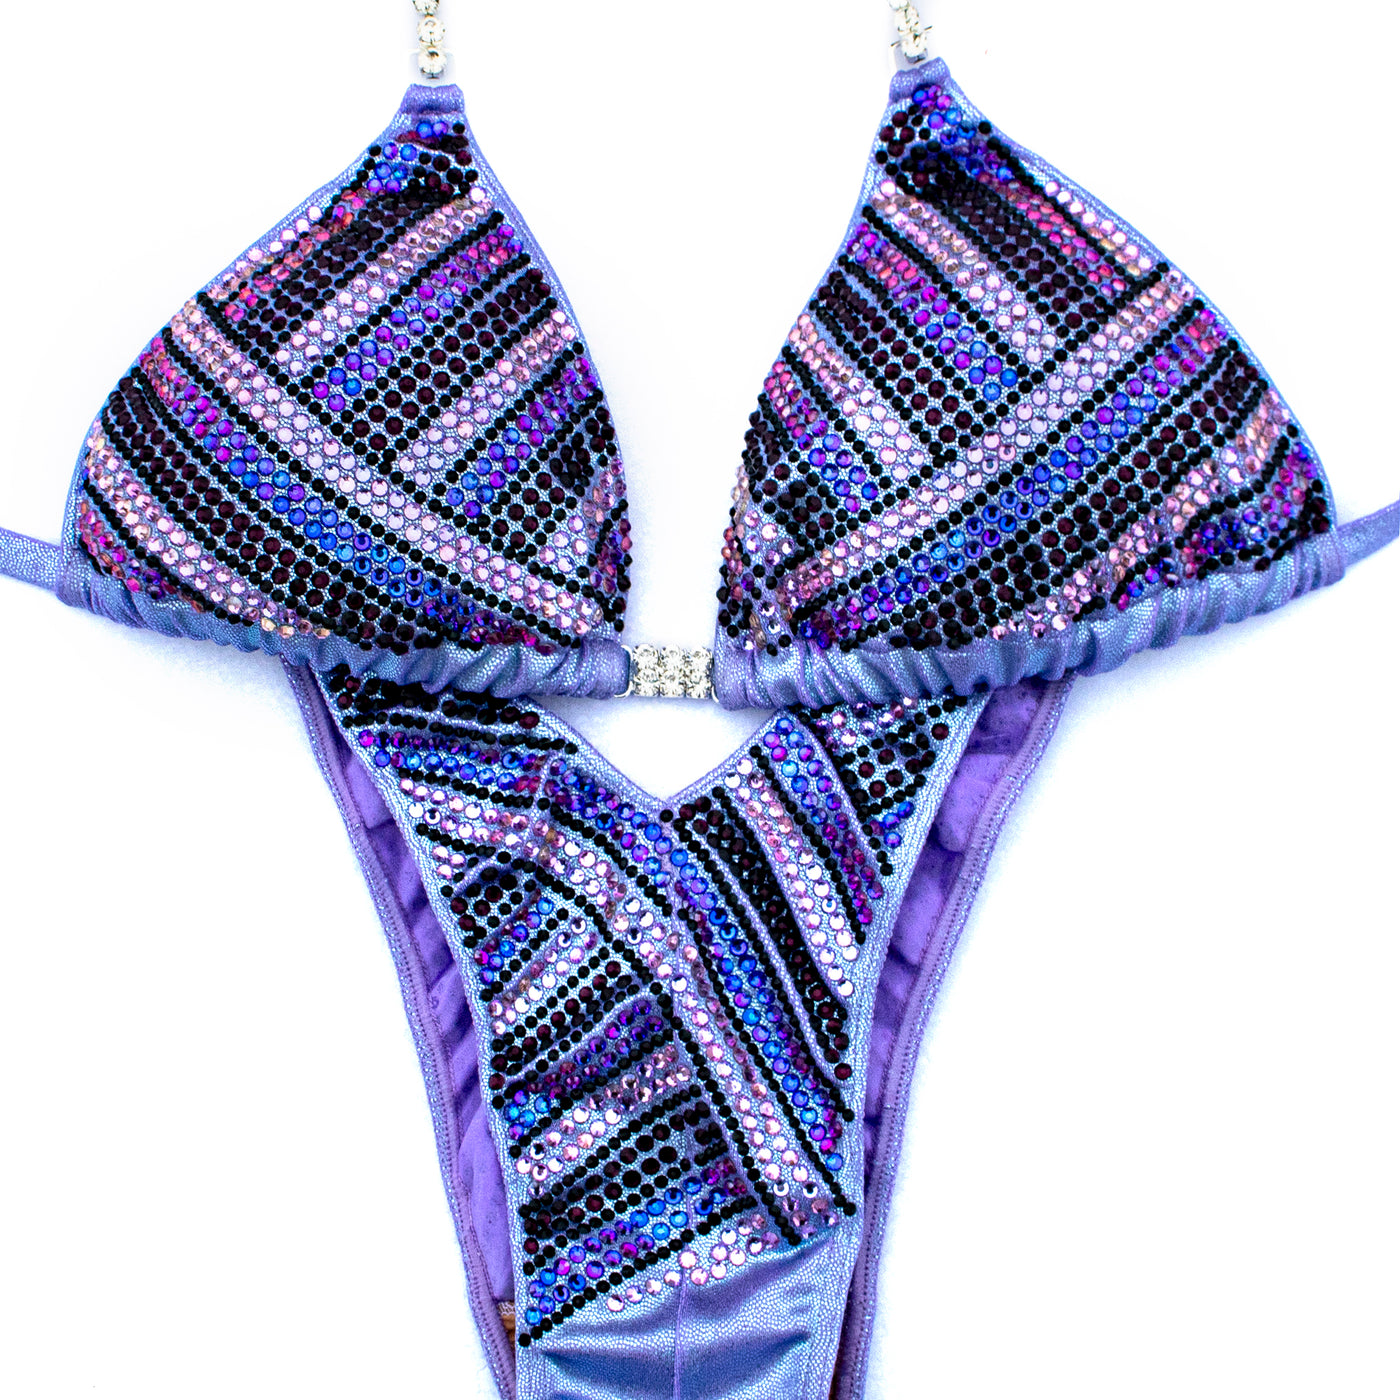 Darcia Figure/WPD Competition Suit | OMG Bikinis